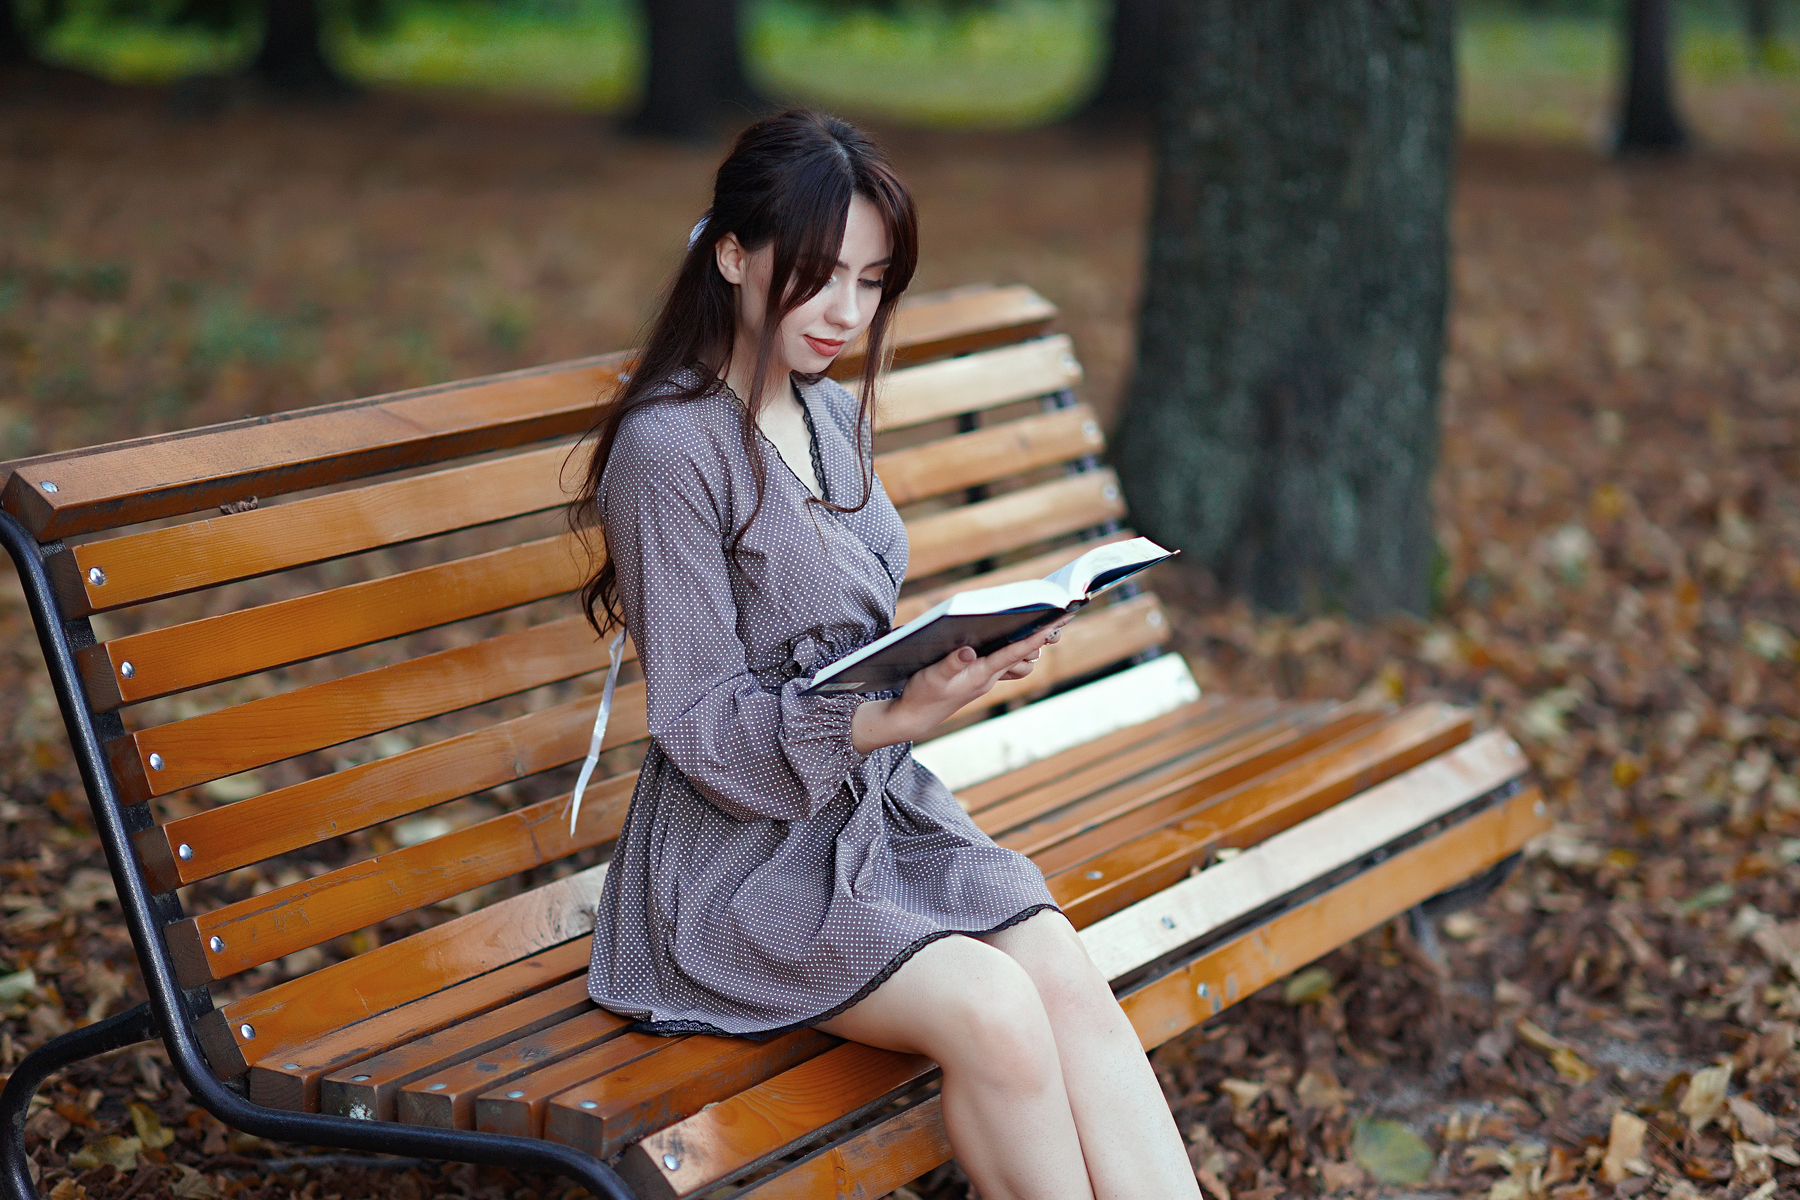 Women Model Brunette Long Hair Women Outdoors Reading Bench Books Fall Fallen Leaves Park Legs 1800x1200